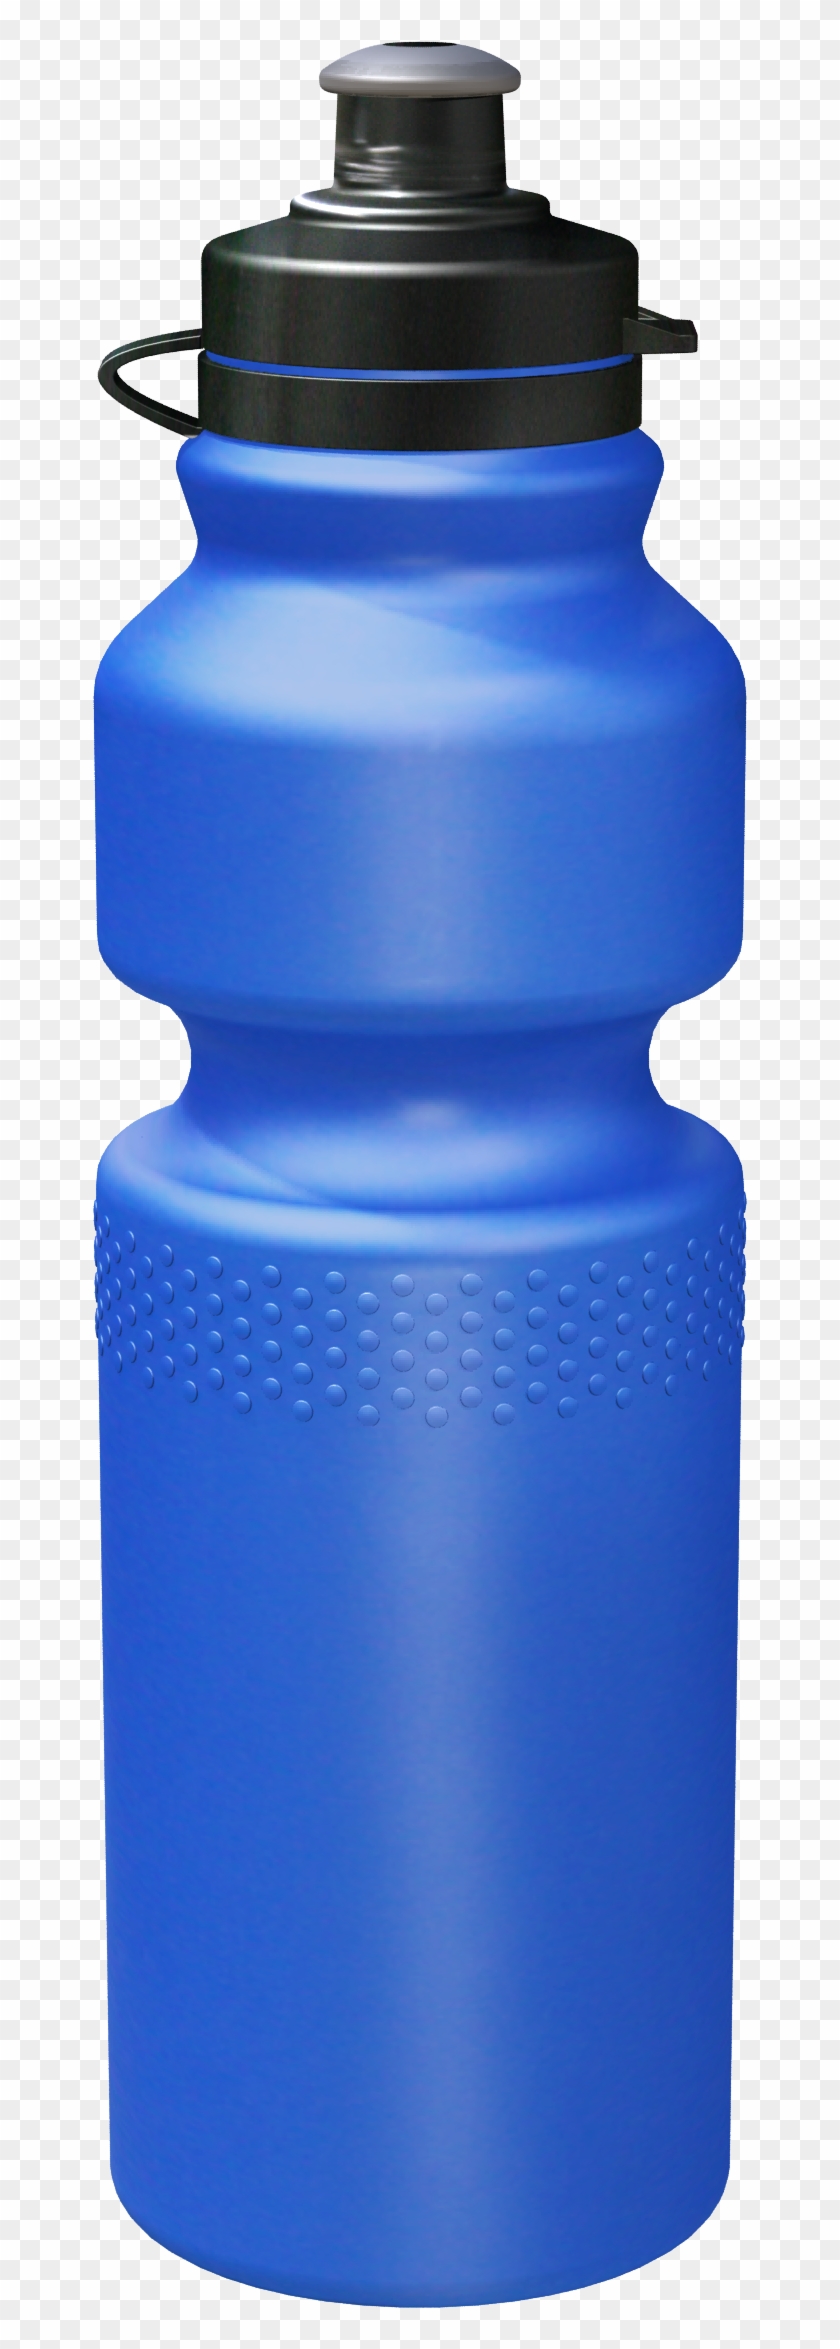 Budget Water Bottle &ndash Branded - Water Bottle Clipart #5473654